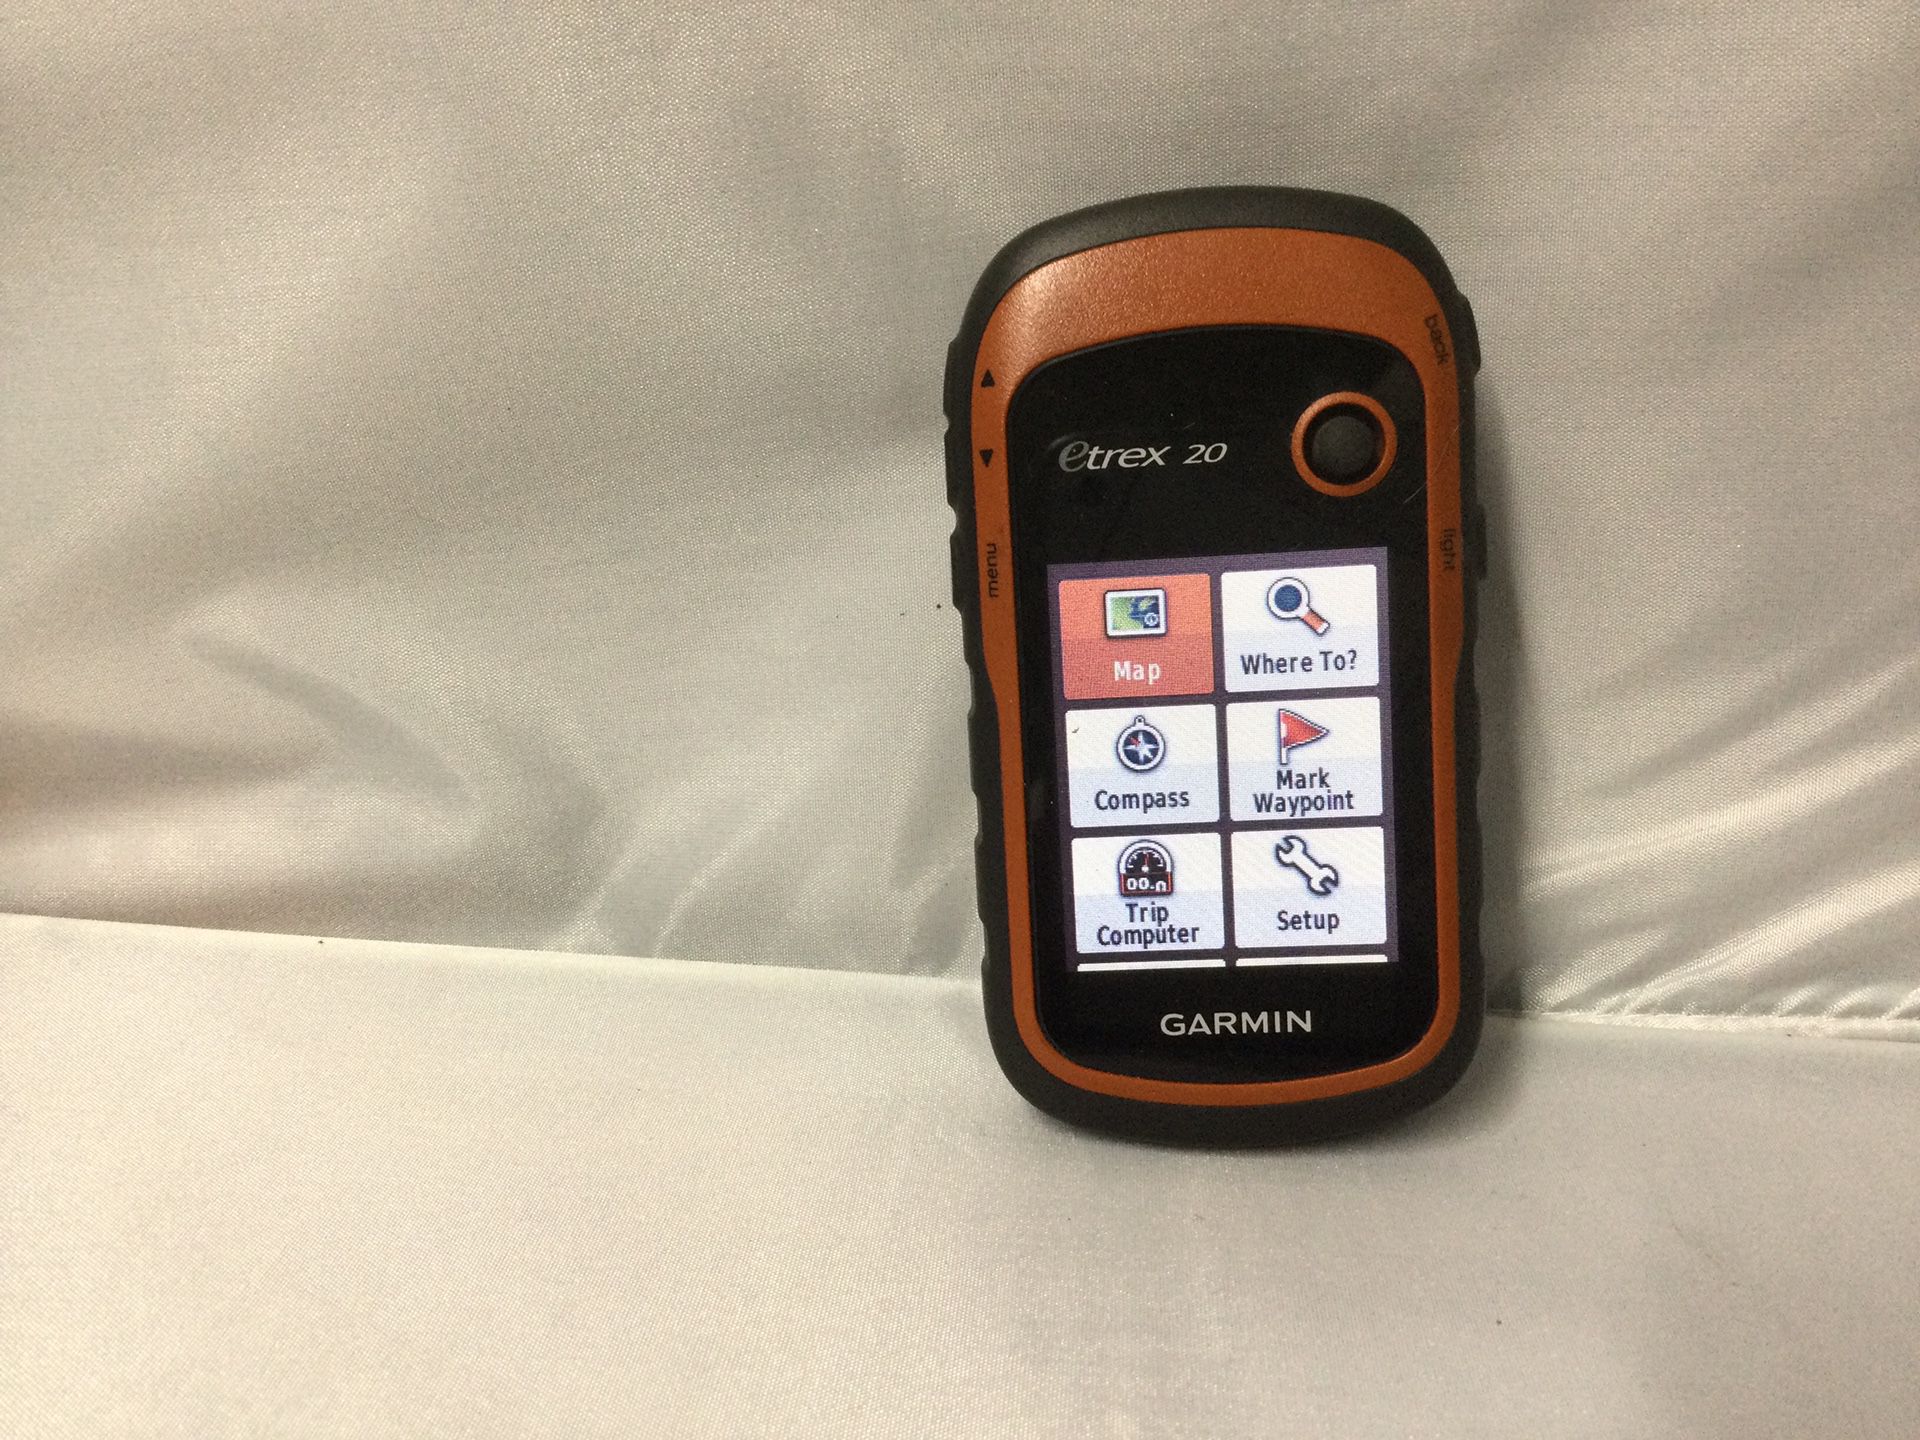 Garmin Etrex 20 GPS for Sale in Edgewood, WA OfferUp